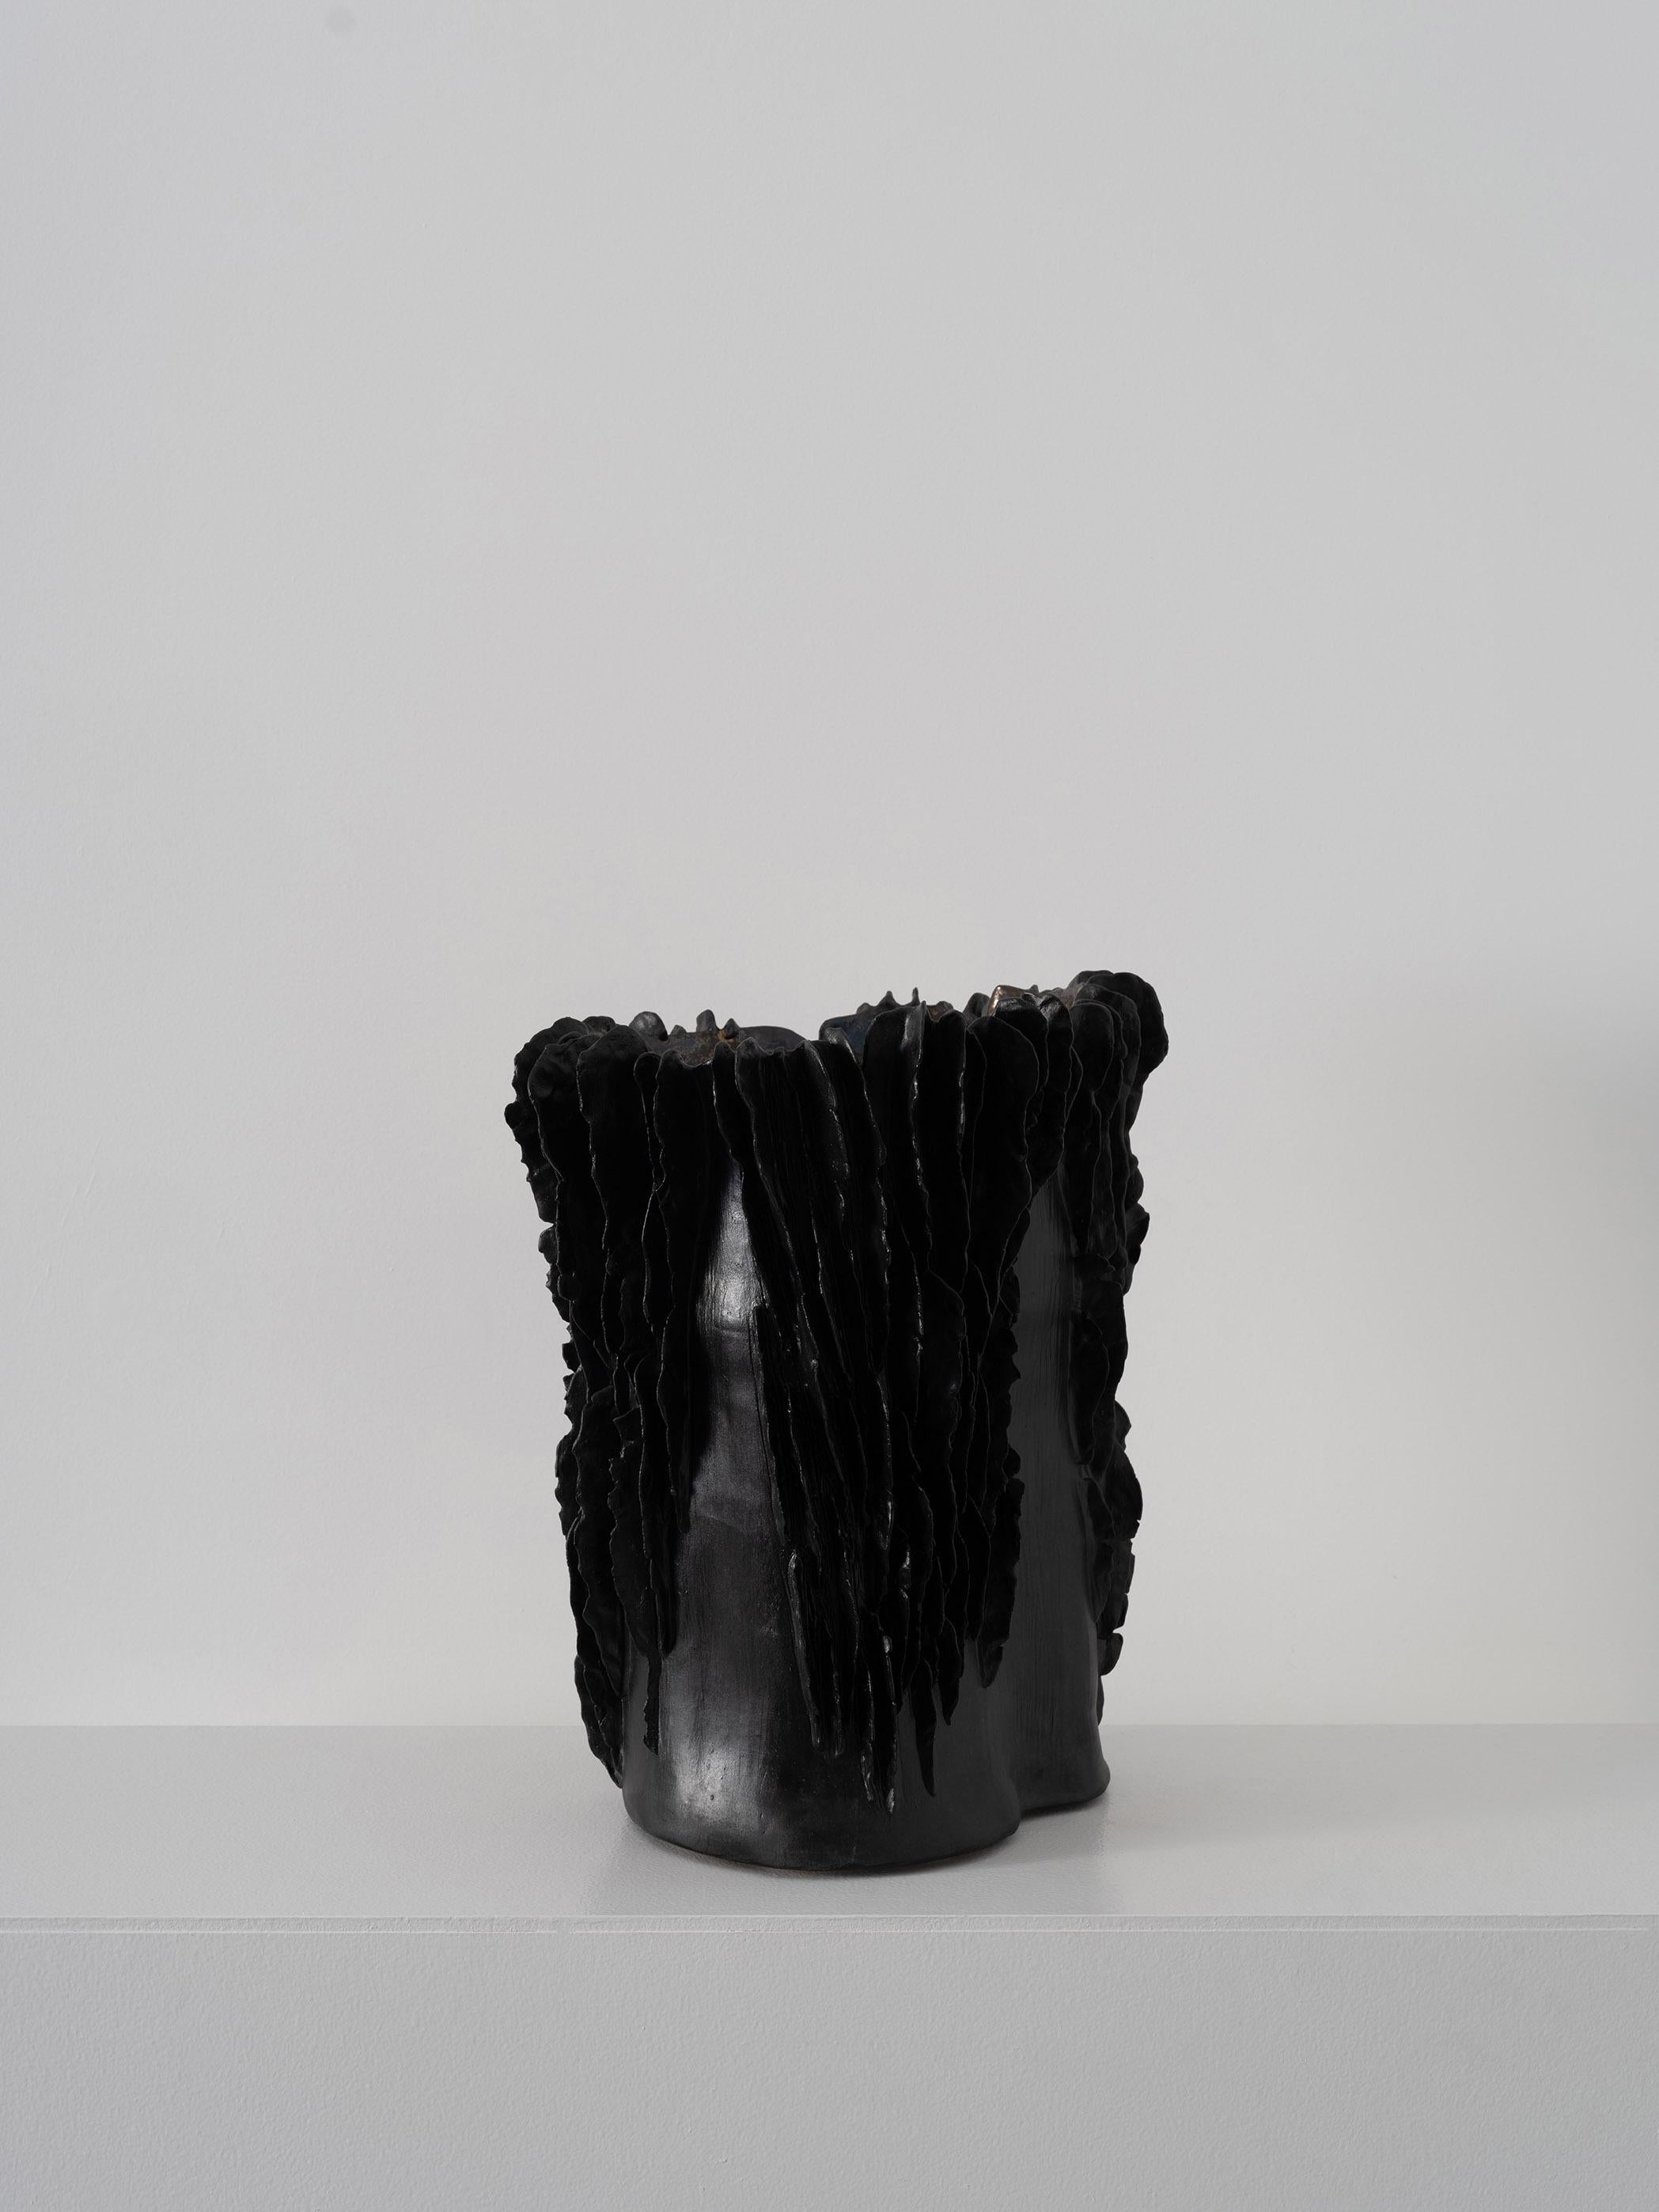 Trish DeMasi
Lamella Vessel, 2022
Metallic glazed and black ceramic
11 x 13 x 15 in.